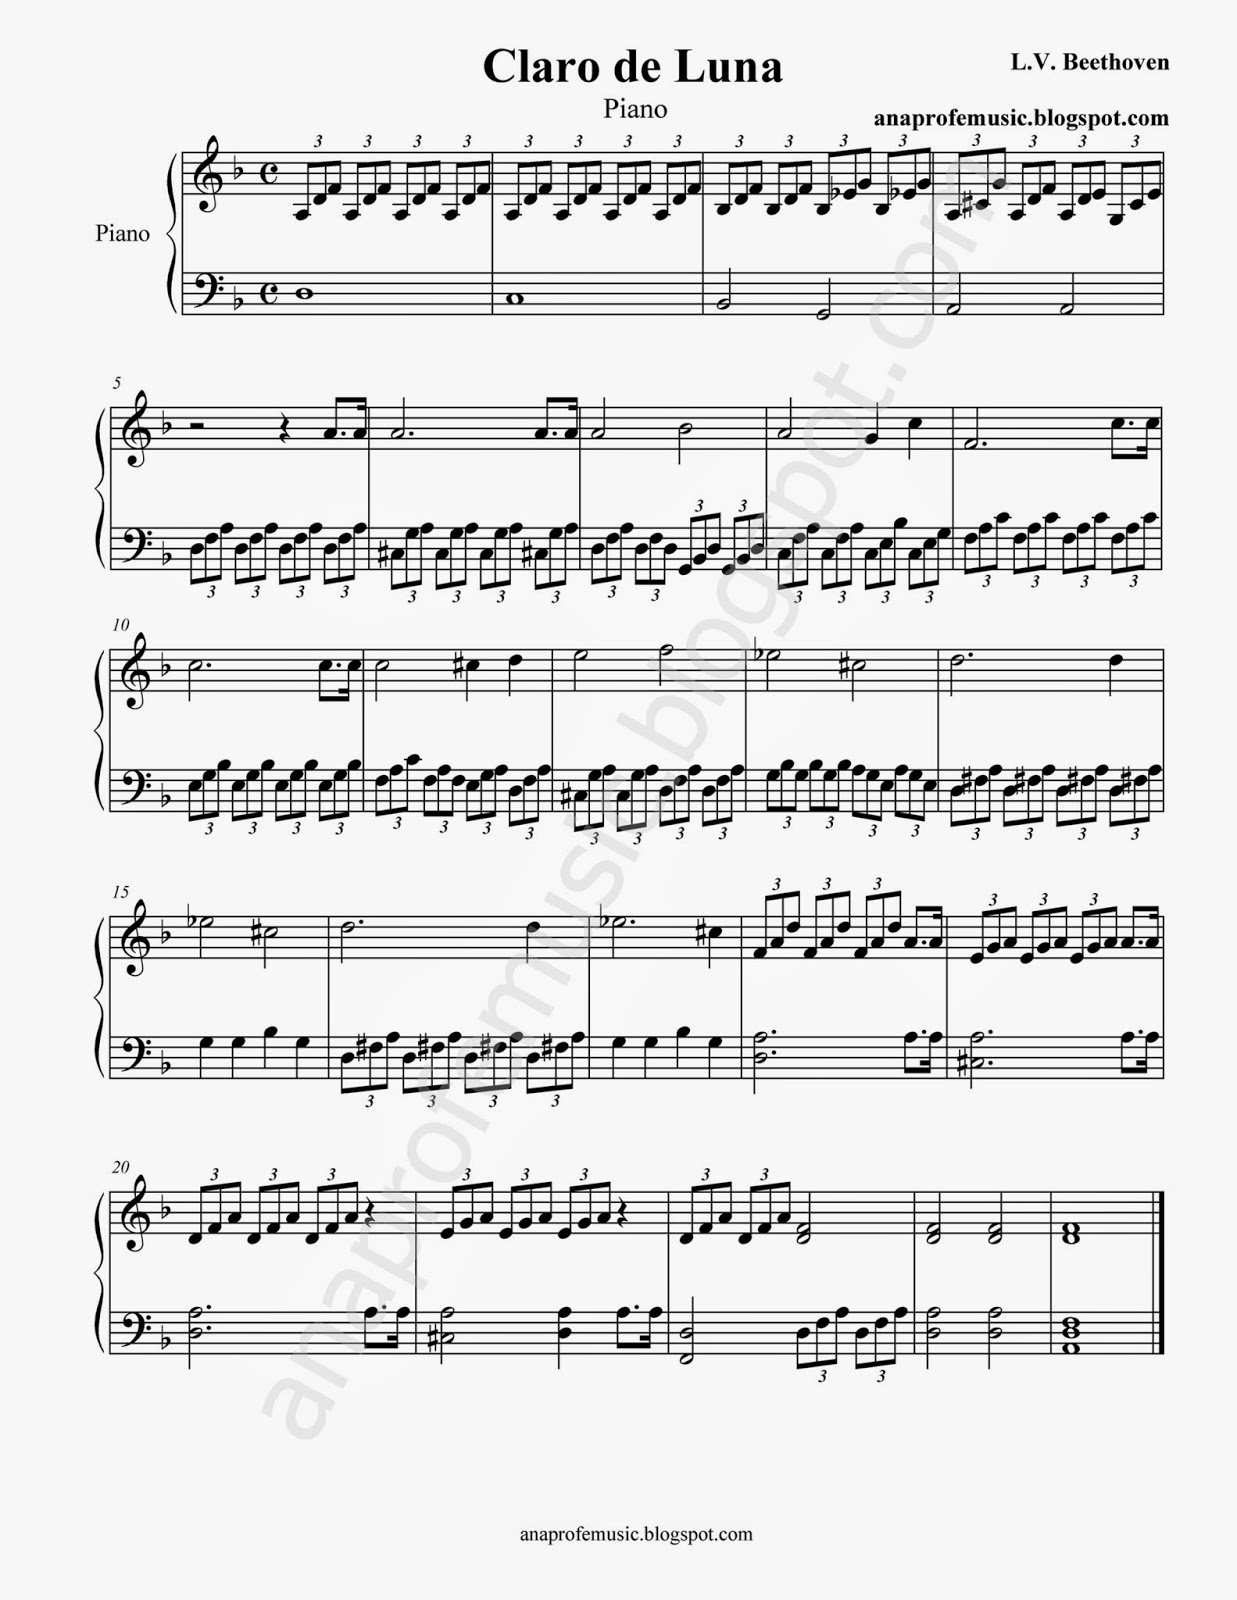 Ordinario oído mano AnaProfeMusic: Partitura Sonata Claro de Luna - Piano fácil -